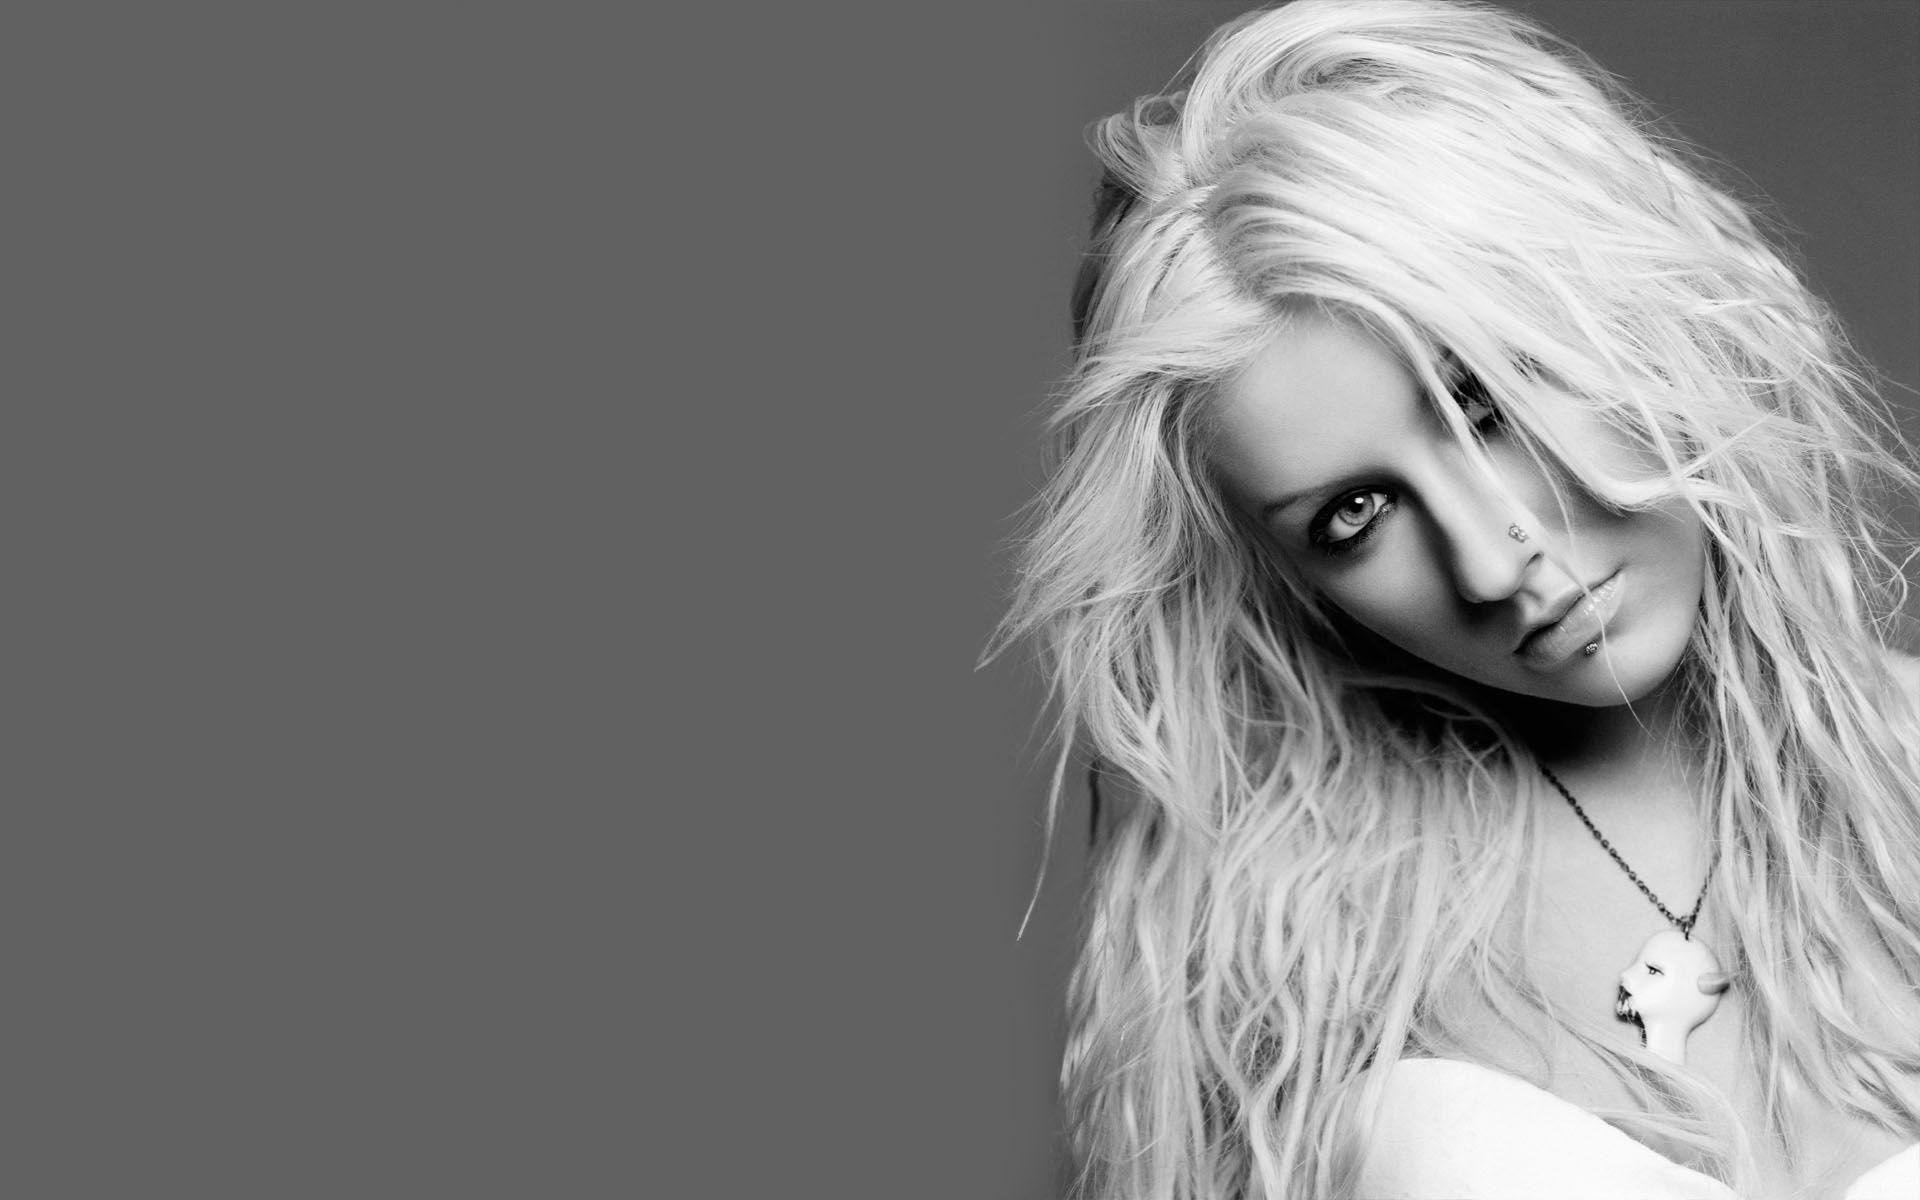 AmazingPict.com. Christina Aguilera Photohoot